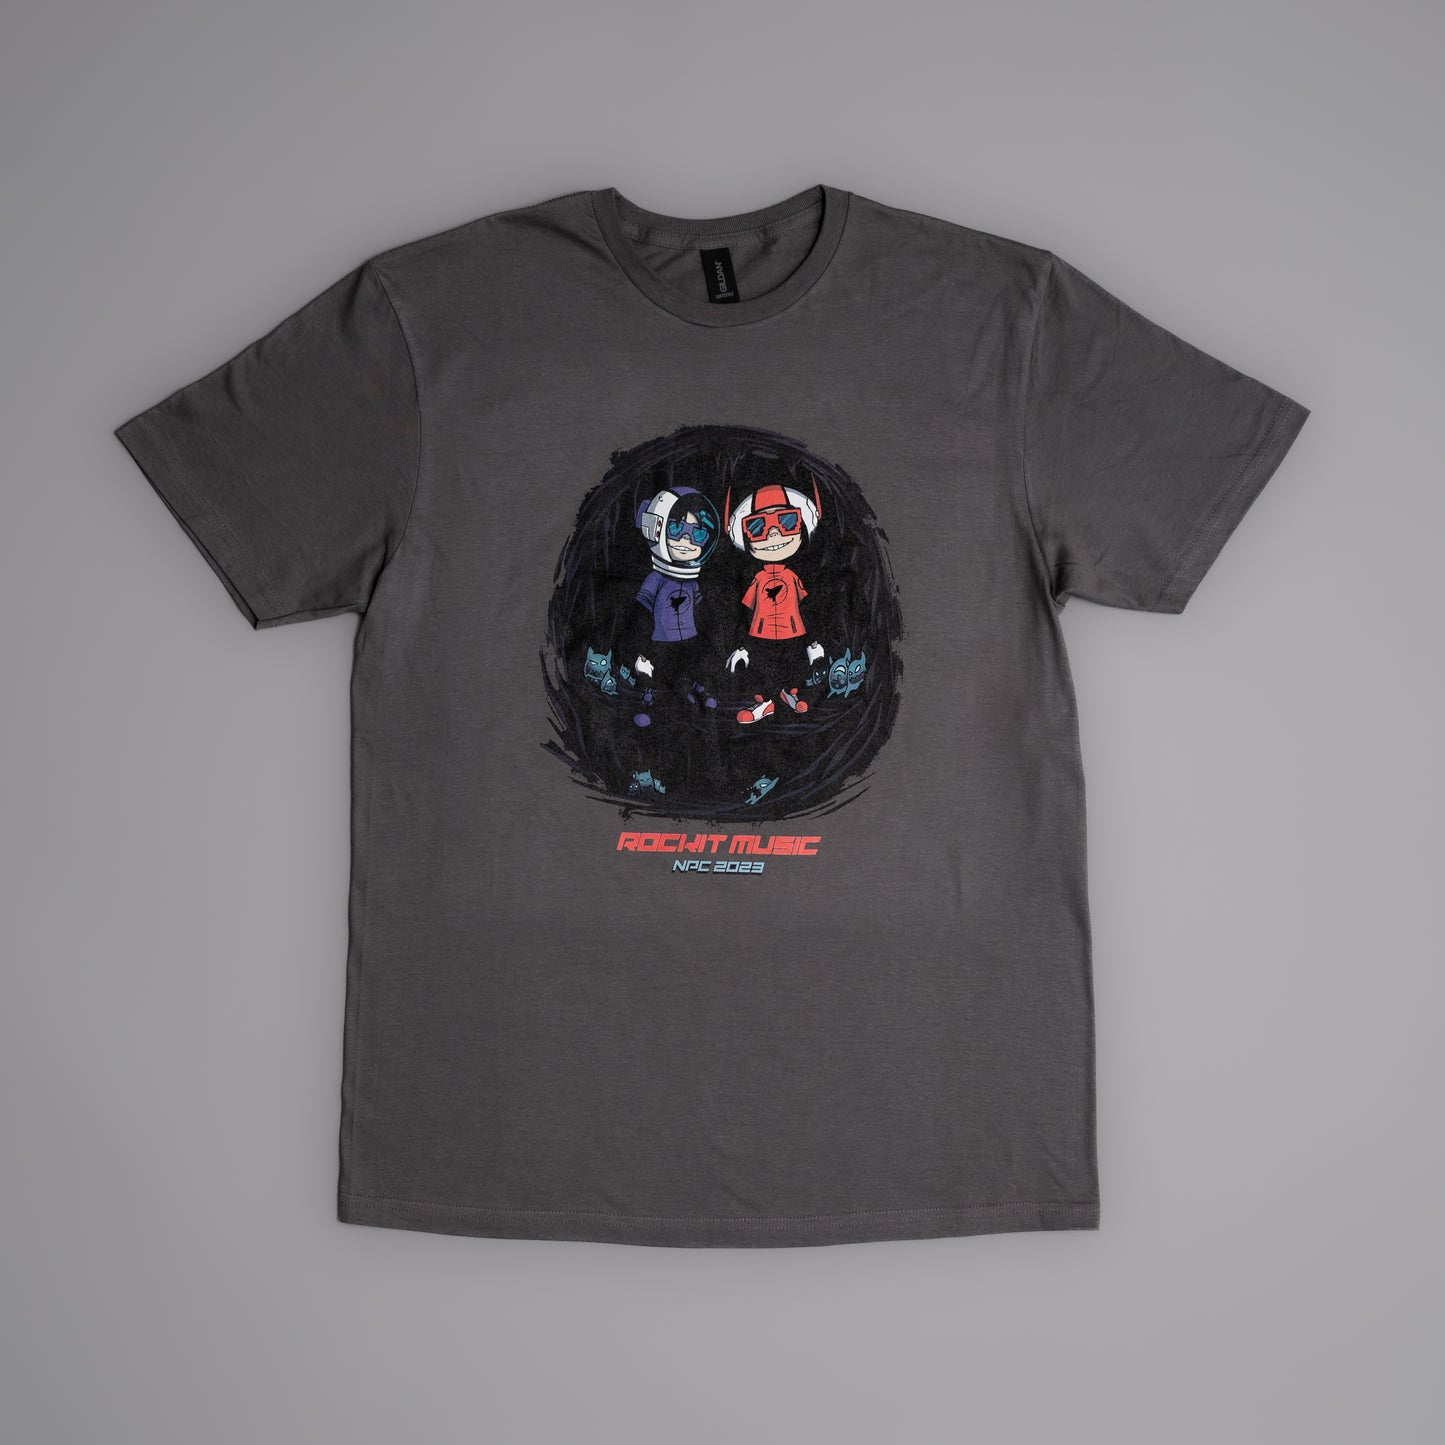 Rockit Music 2023 NPC T-Shirt